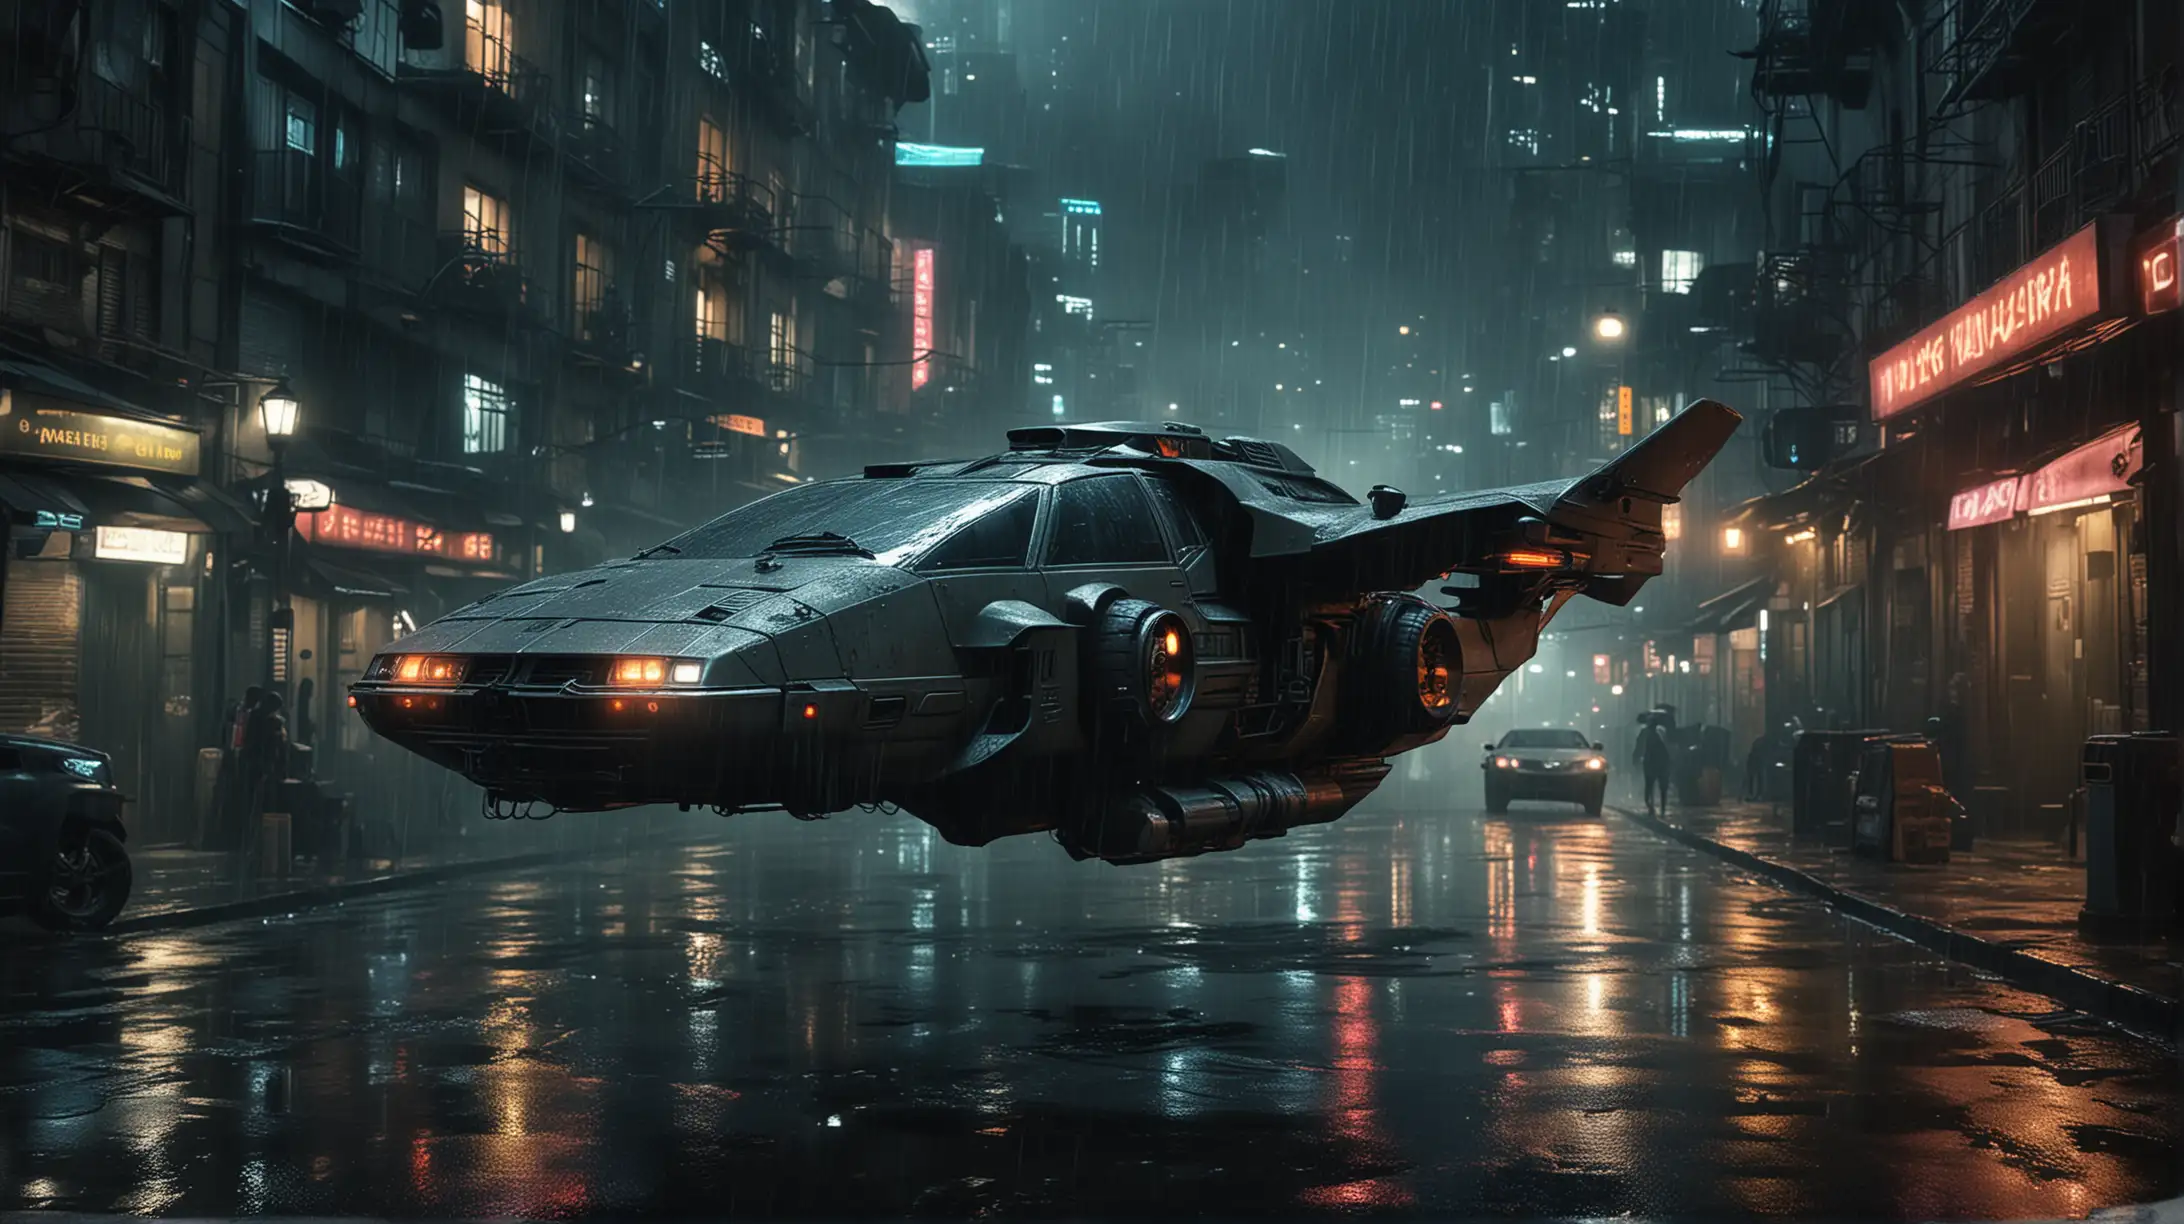 Futuristic Flying Car Landing in Rainy Night Cityscape